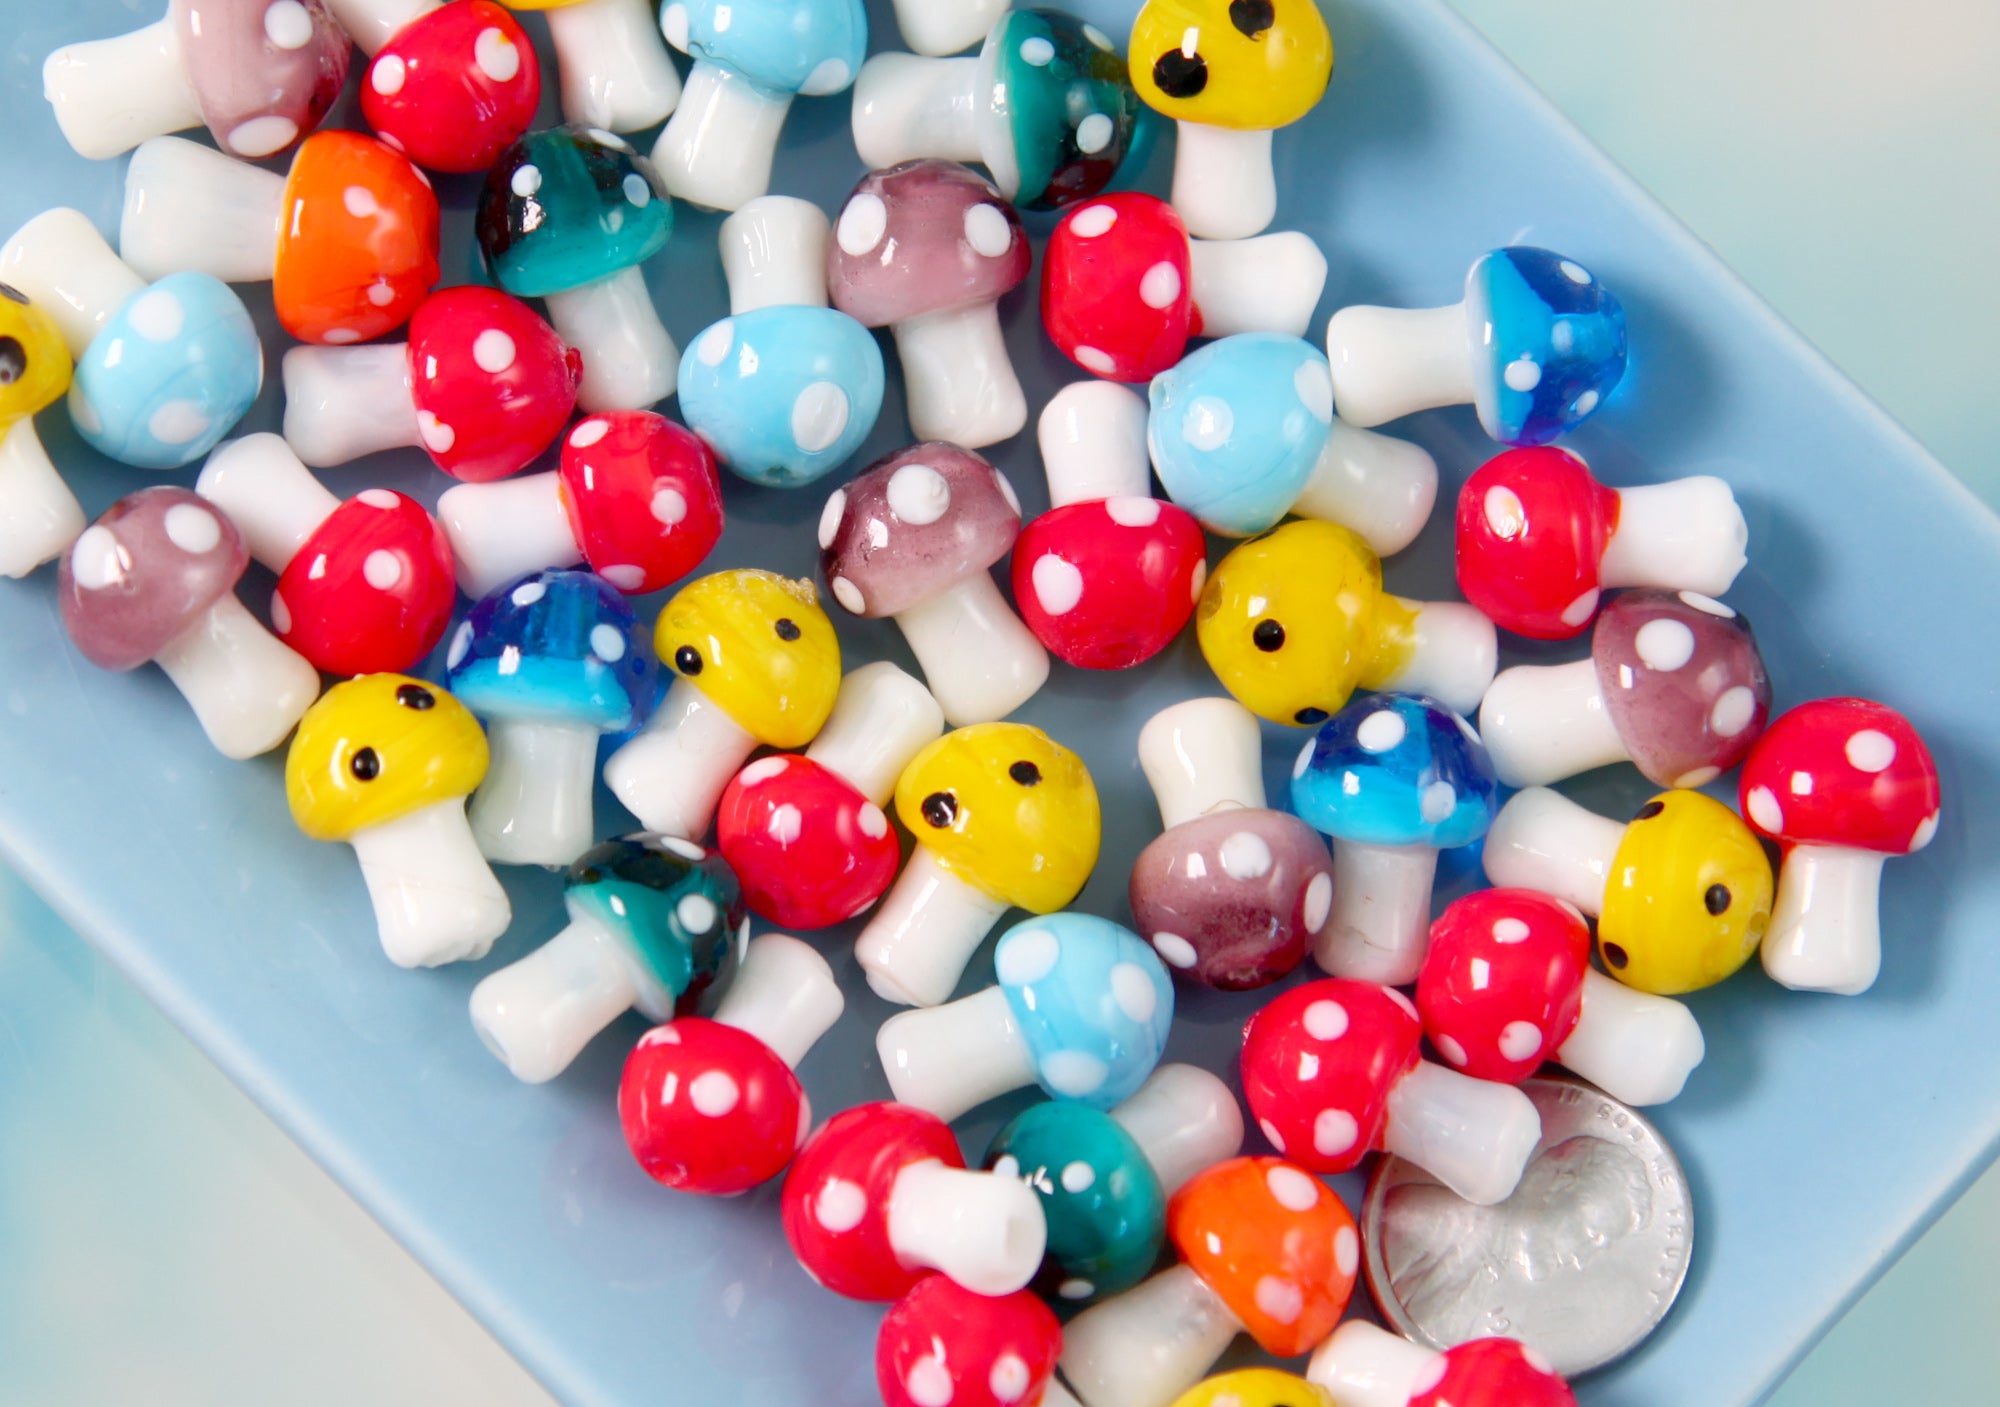 Glass Mushroom Beads – The Bead Shop